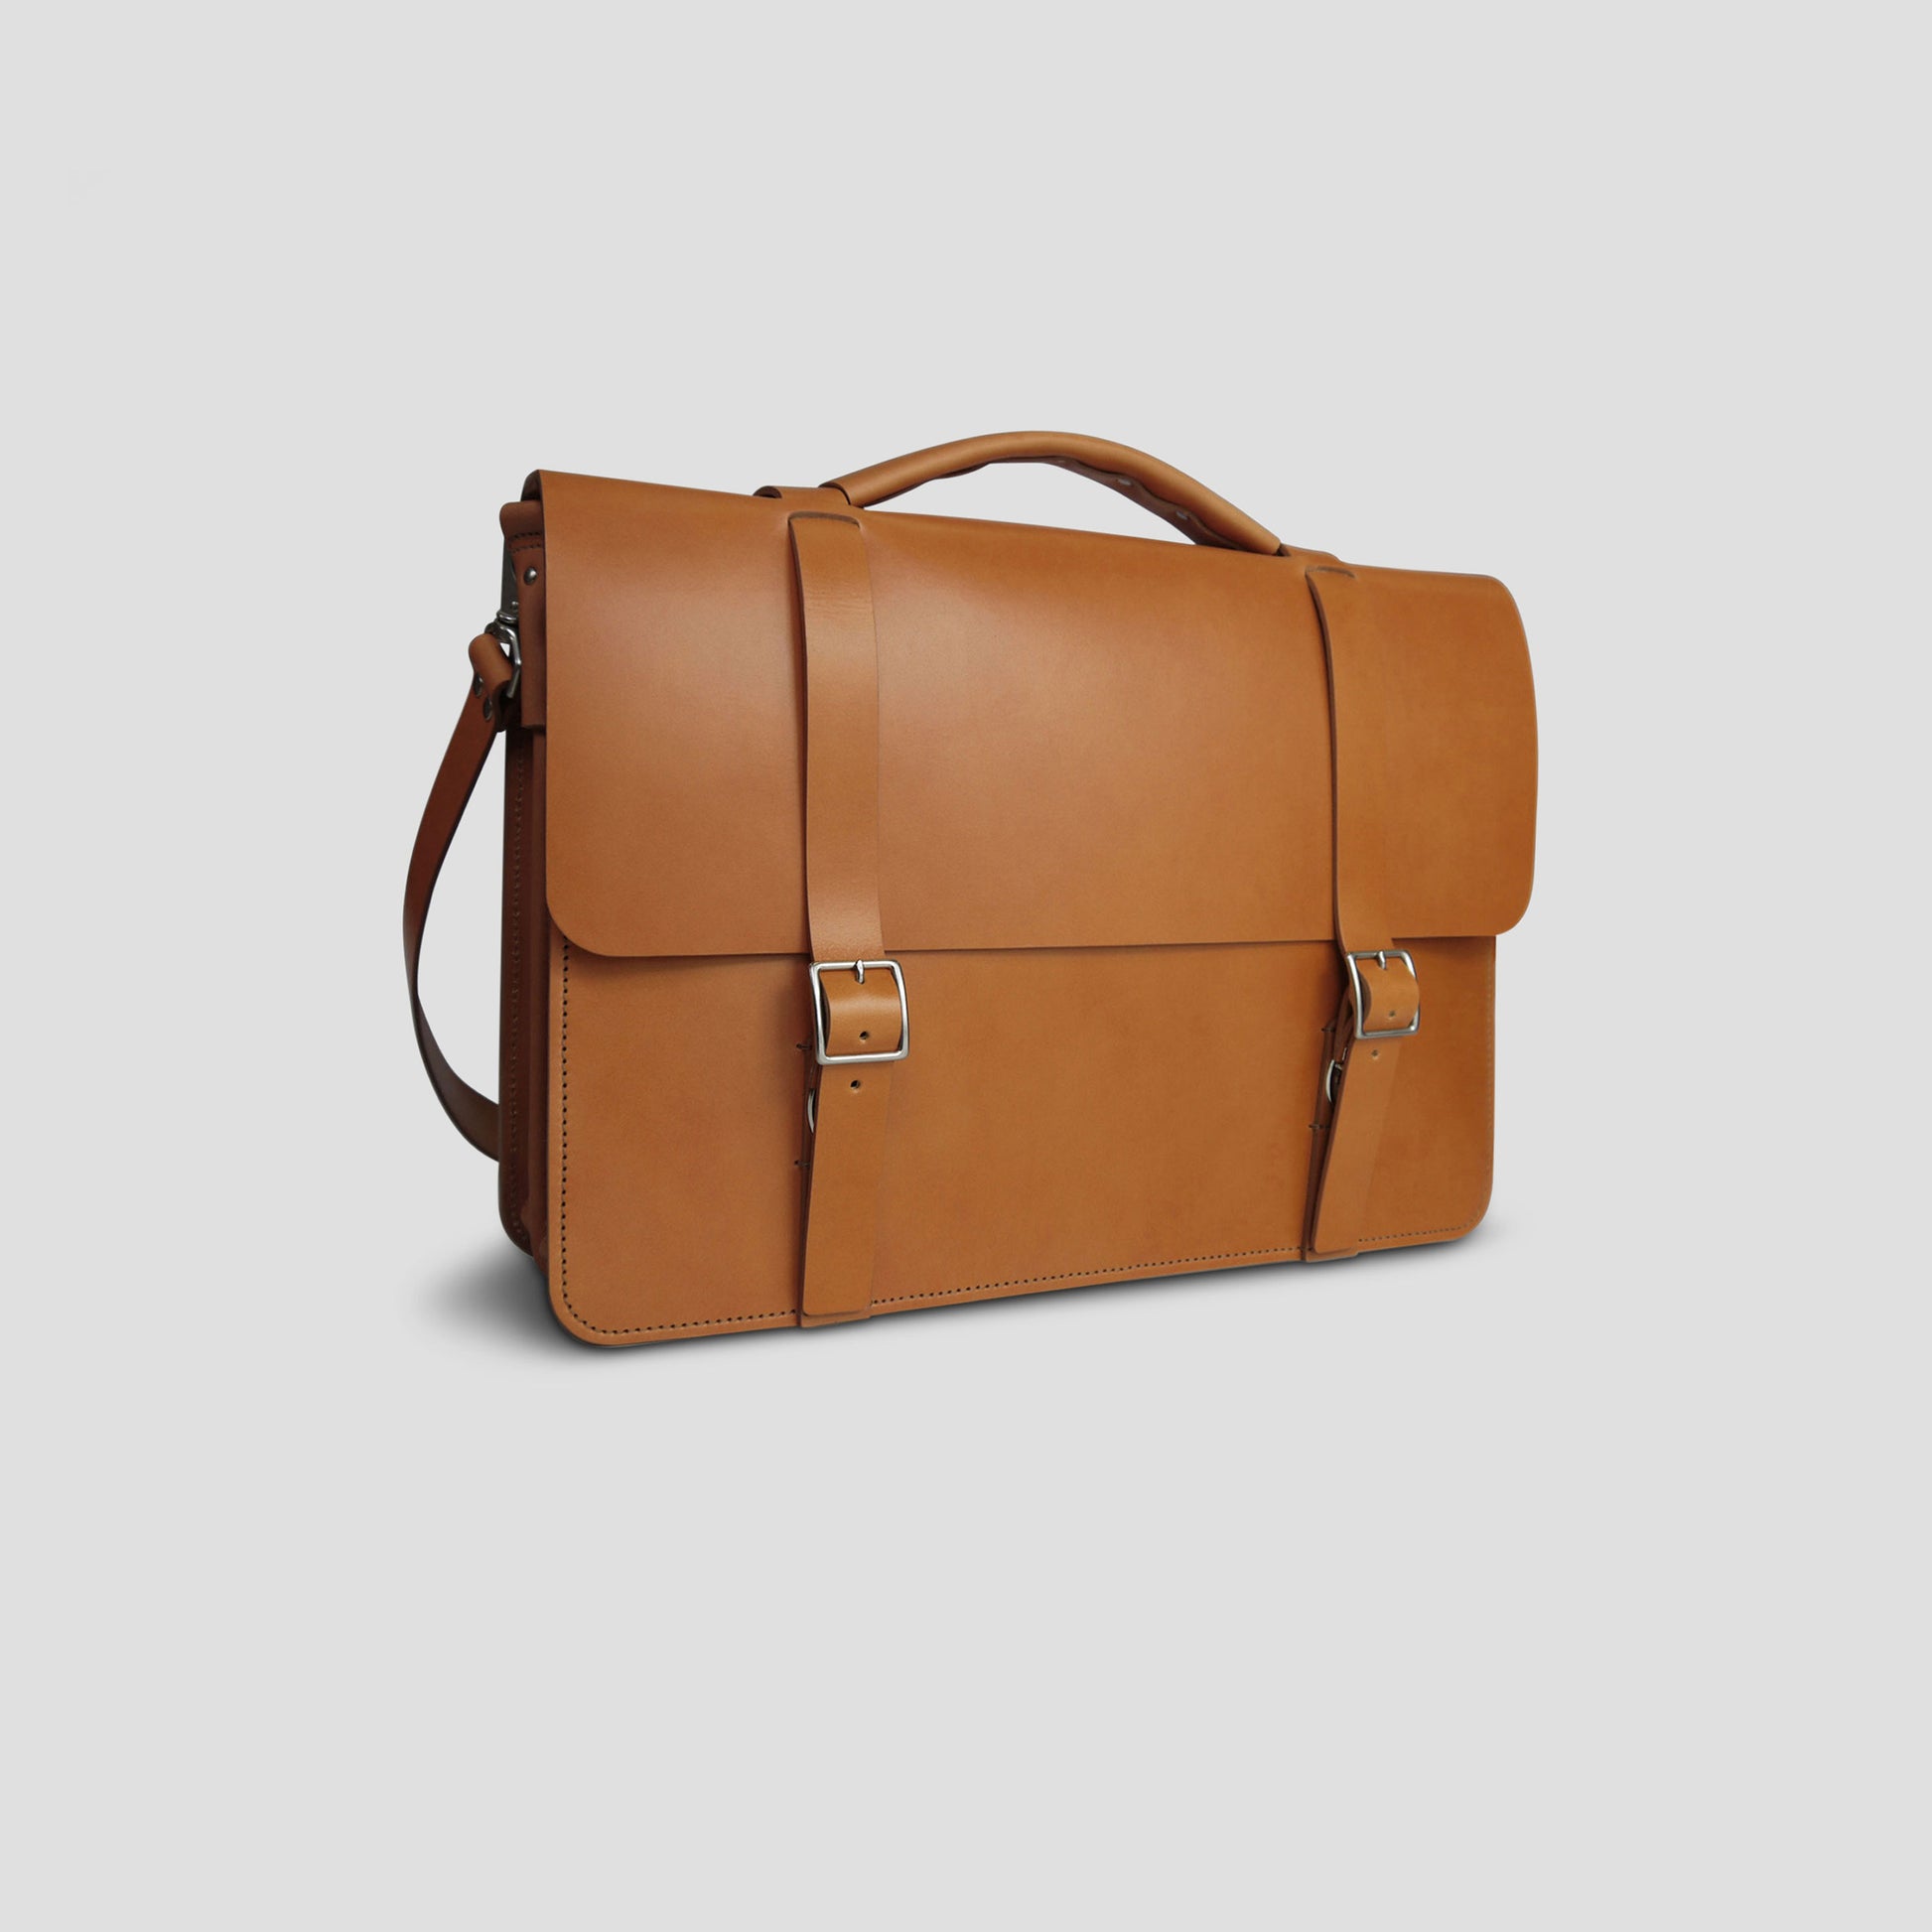 Modern Full Grain Leather Briefcase for Men with Shoulder Strap